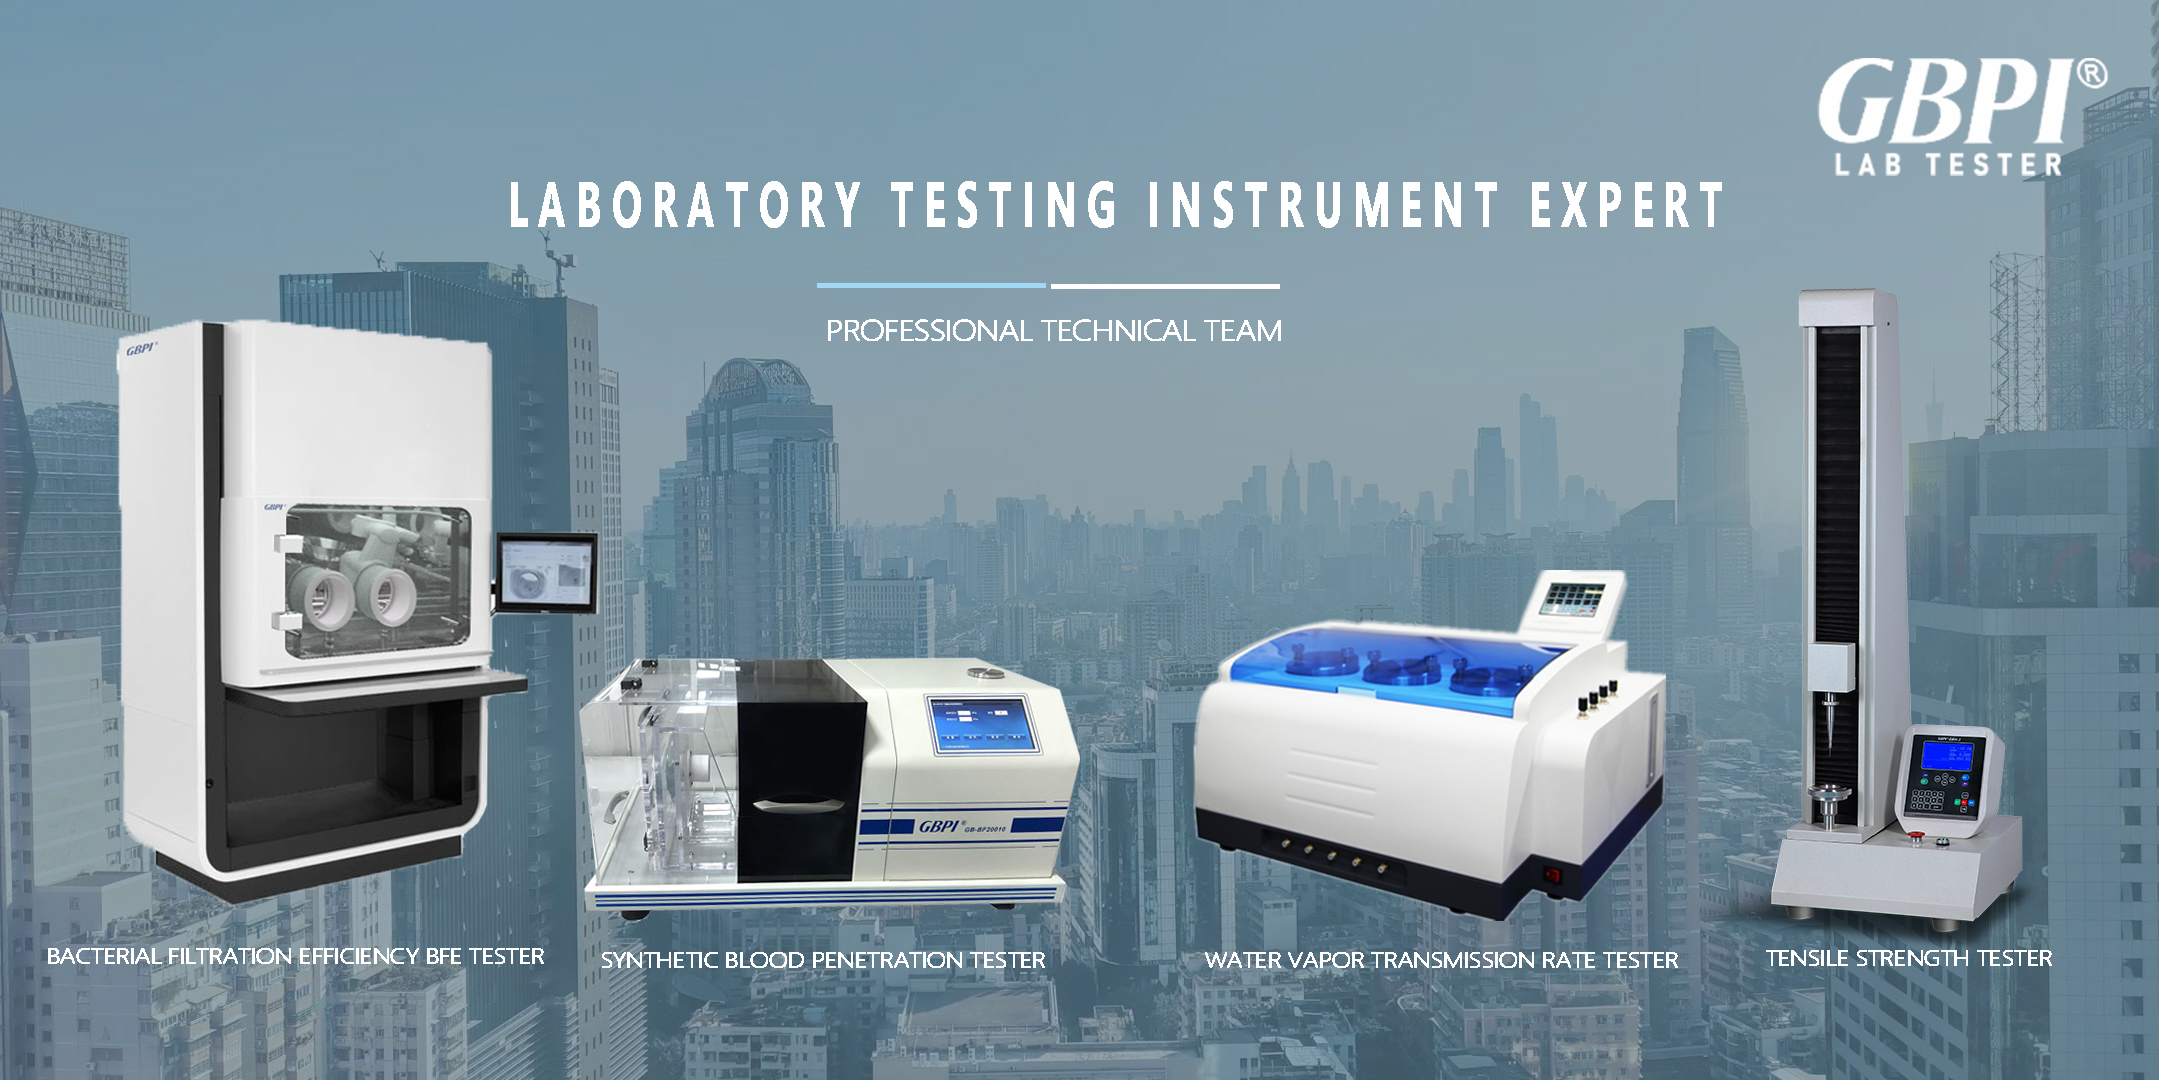 Laboratory testing instrument